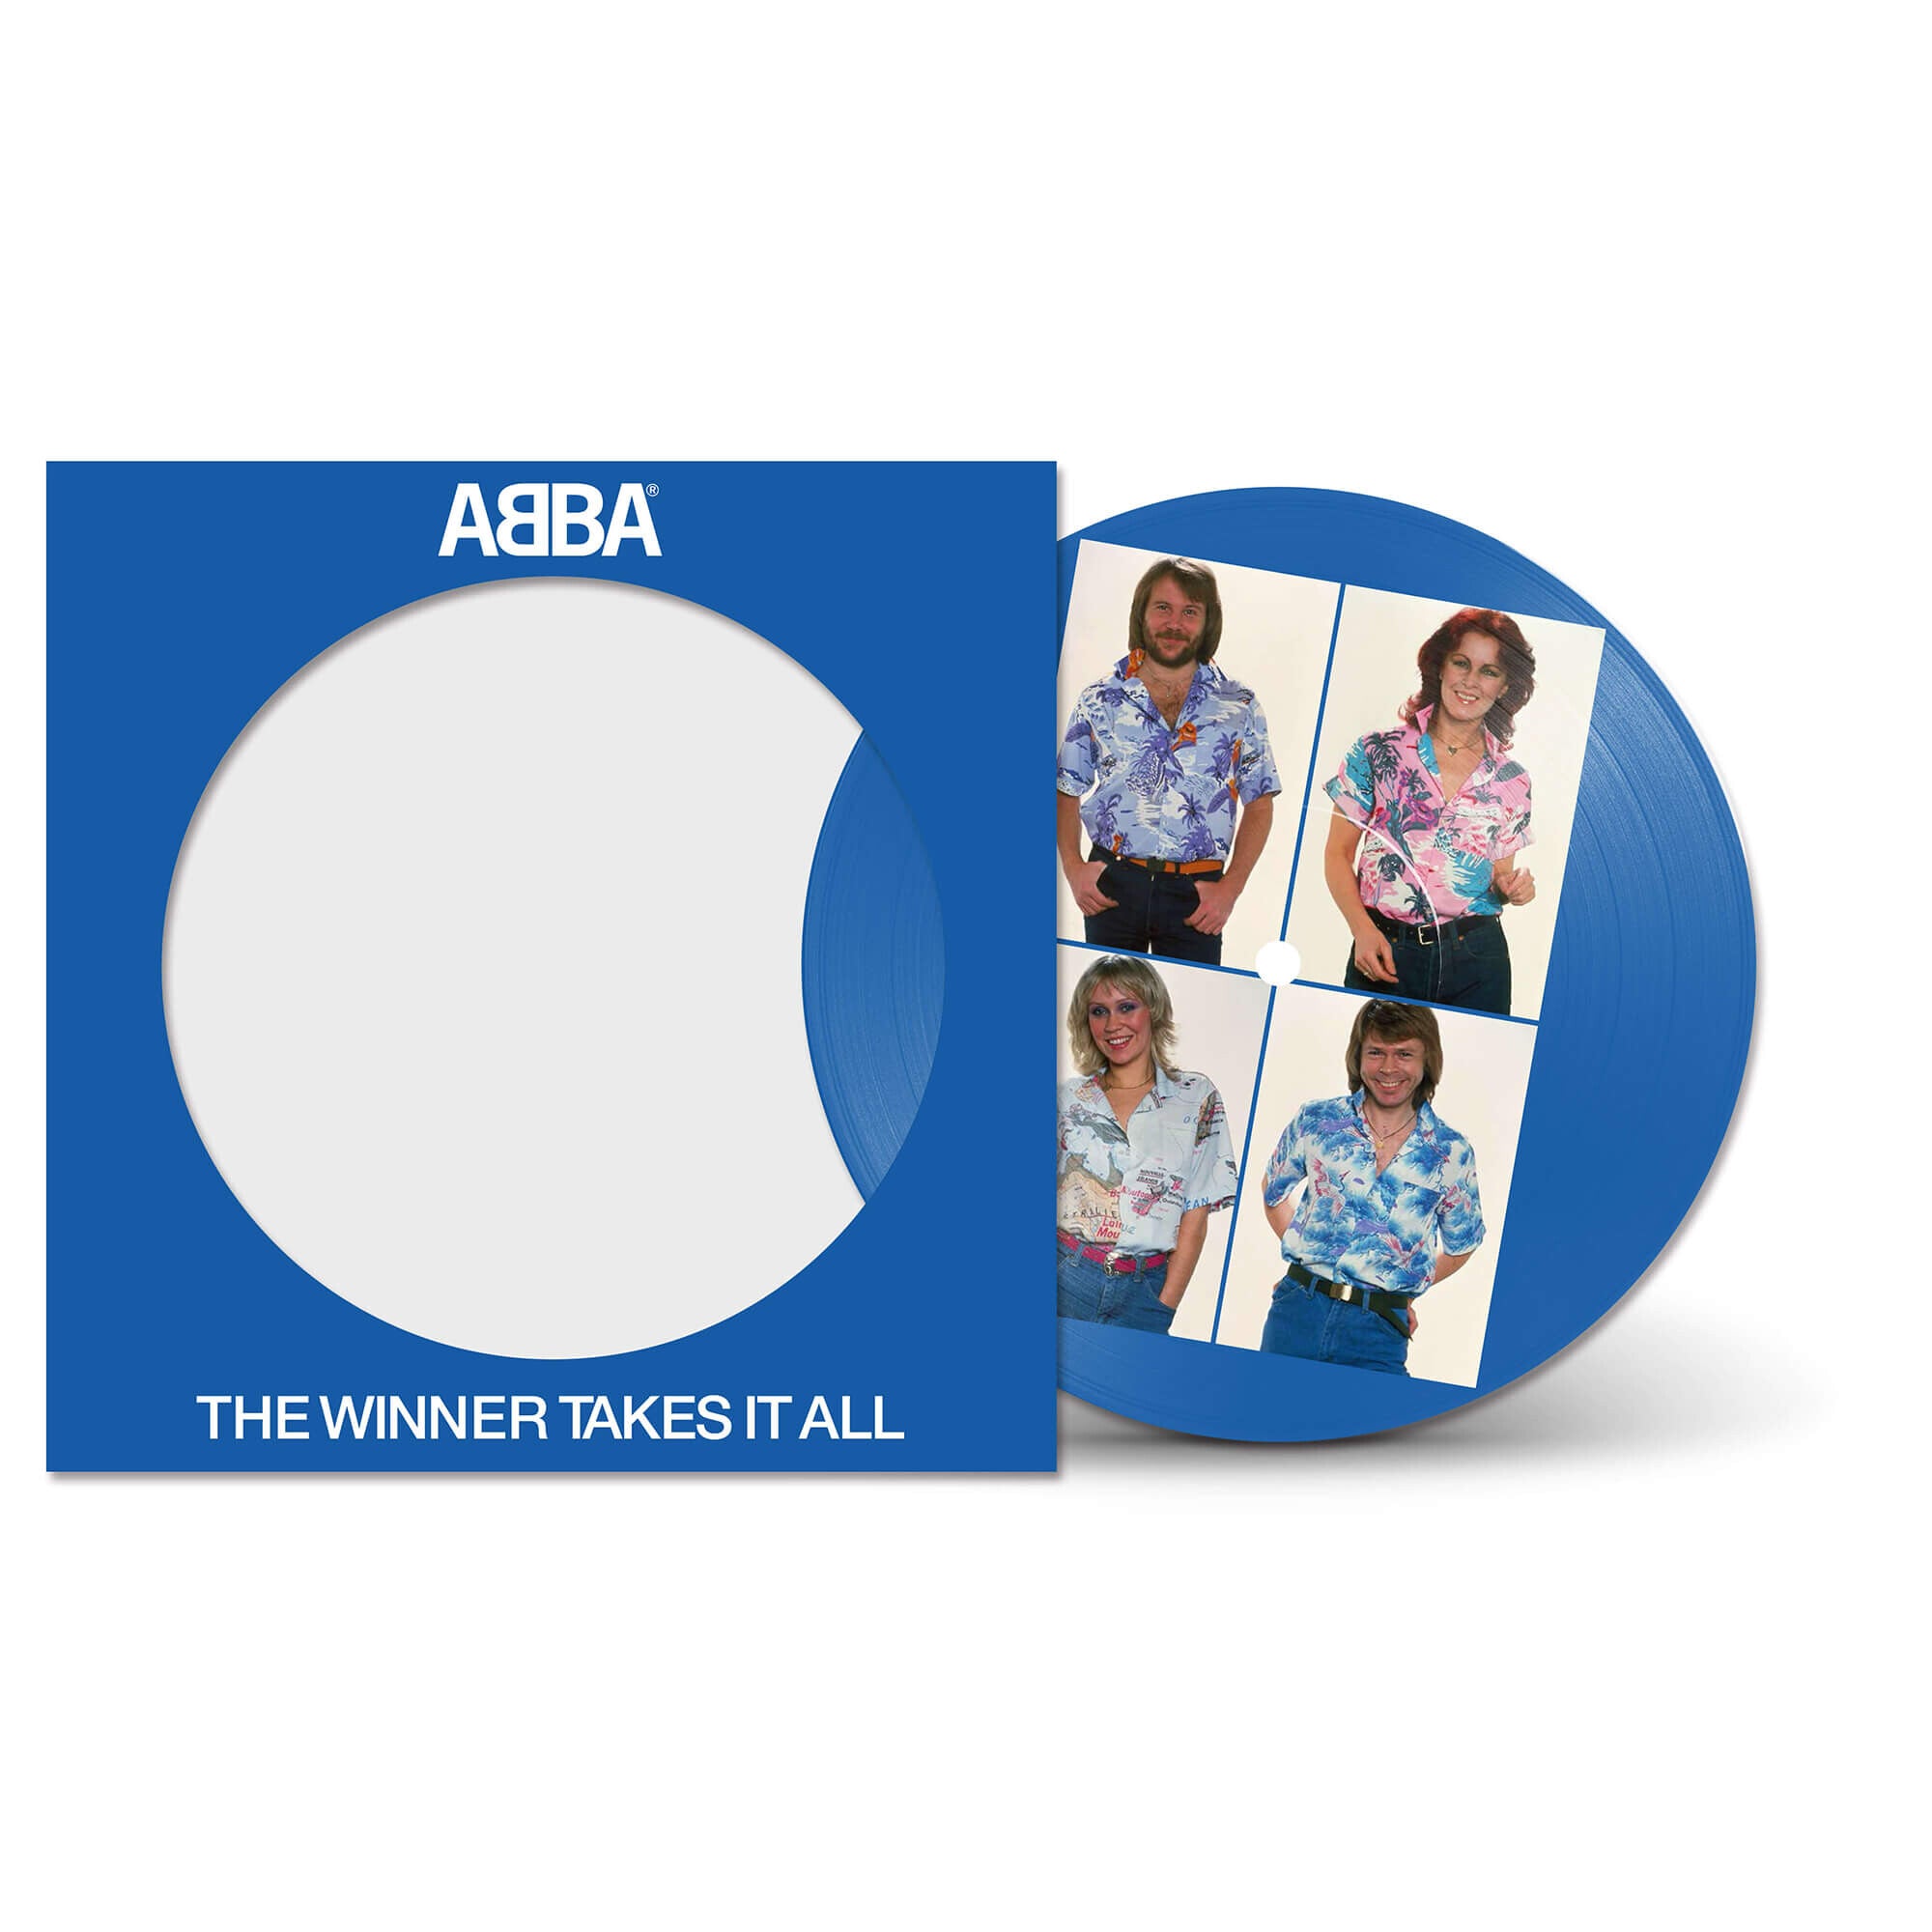 https://images.bravado.de/prod/product-assets/product-asset-data/abba/abba/products/134255/web/297069/image-thumb__297069__3000x3000_original/ABBA-The-Winner-Takes-It-All-40th-Anniversary-Ltd-Picture-Disc-Vinyl-134255-297069.f89bf463.jpg